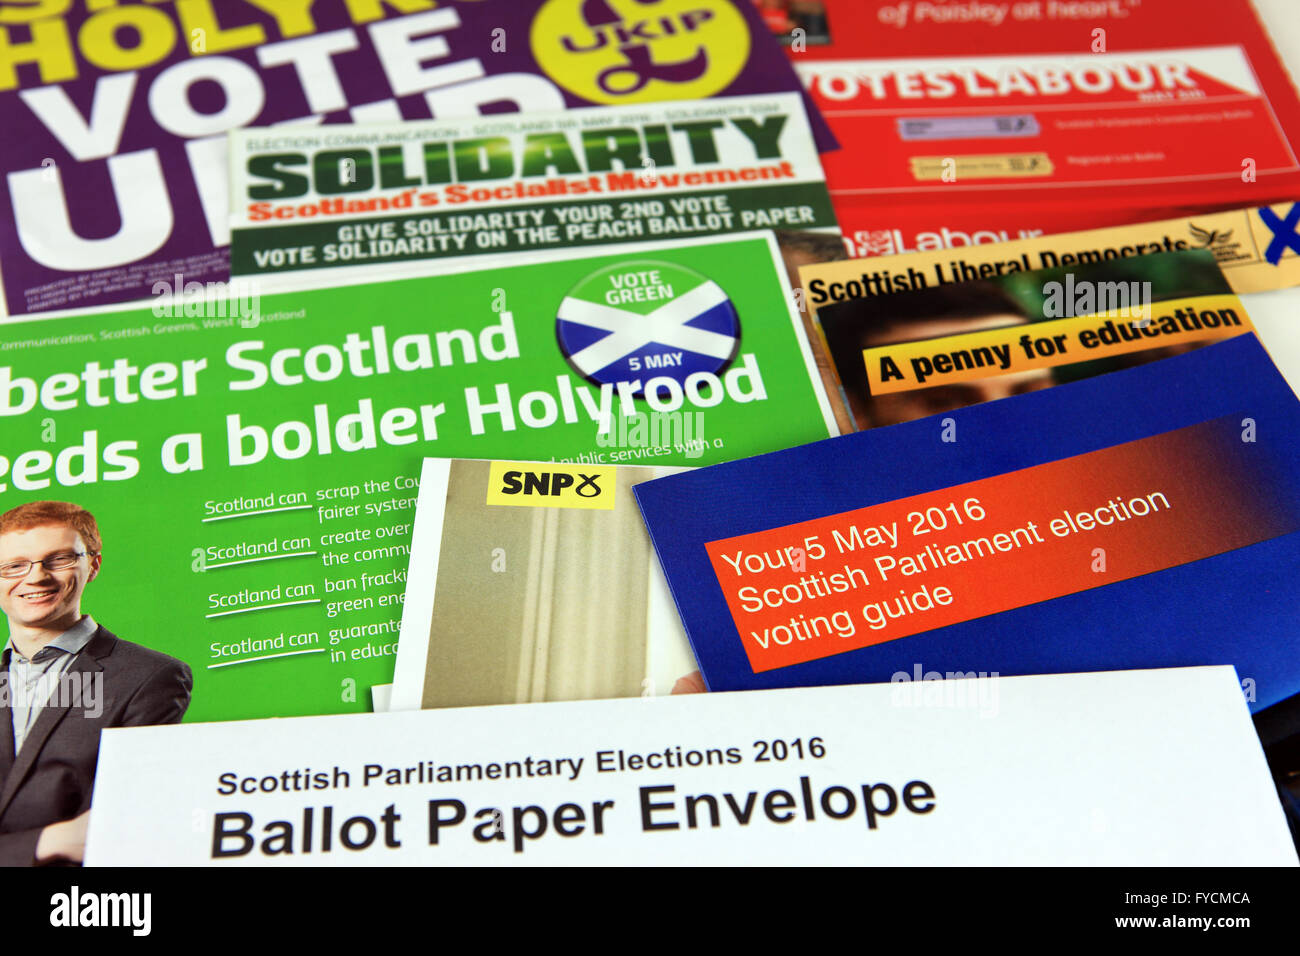 Scottish Parliamentary Elections 2016 leaflets Stock Photo